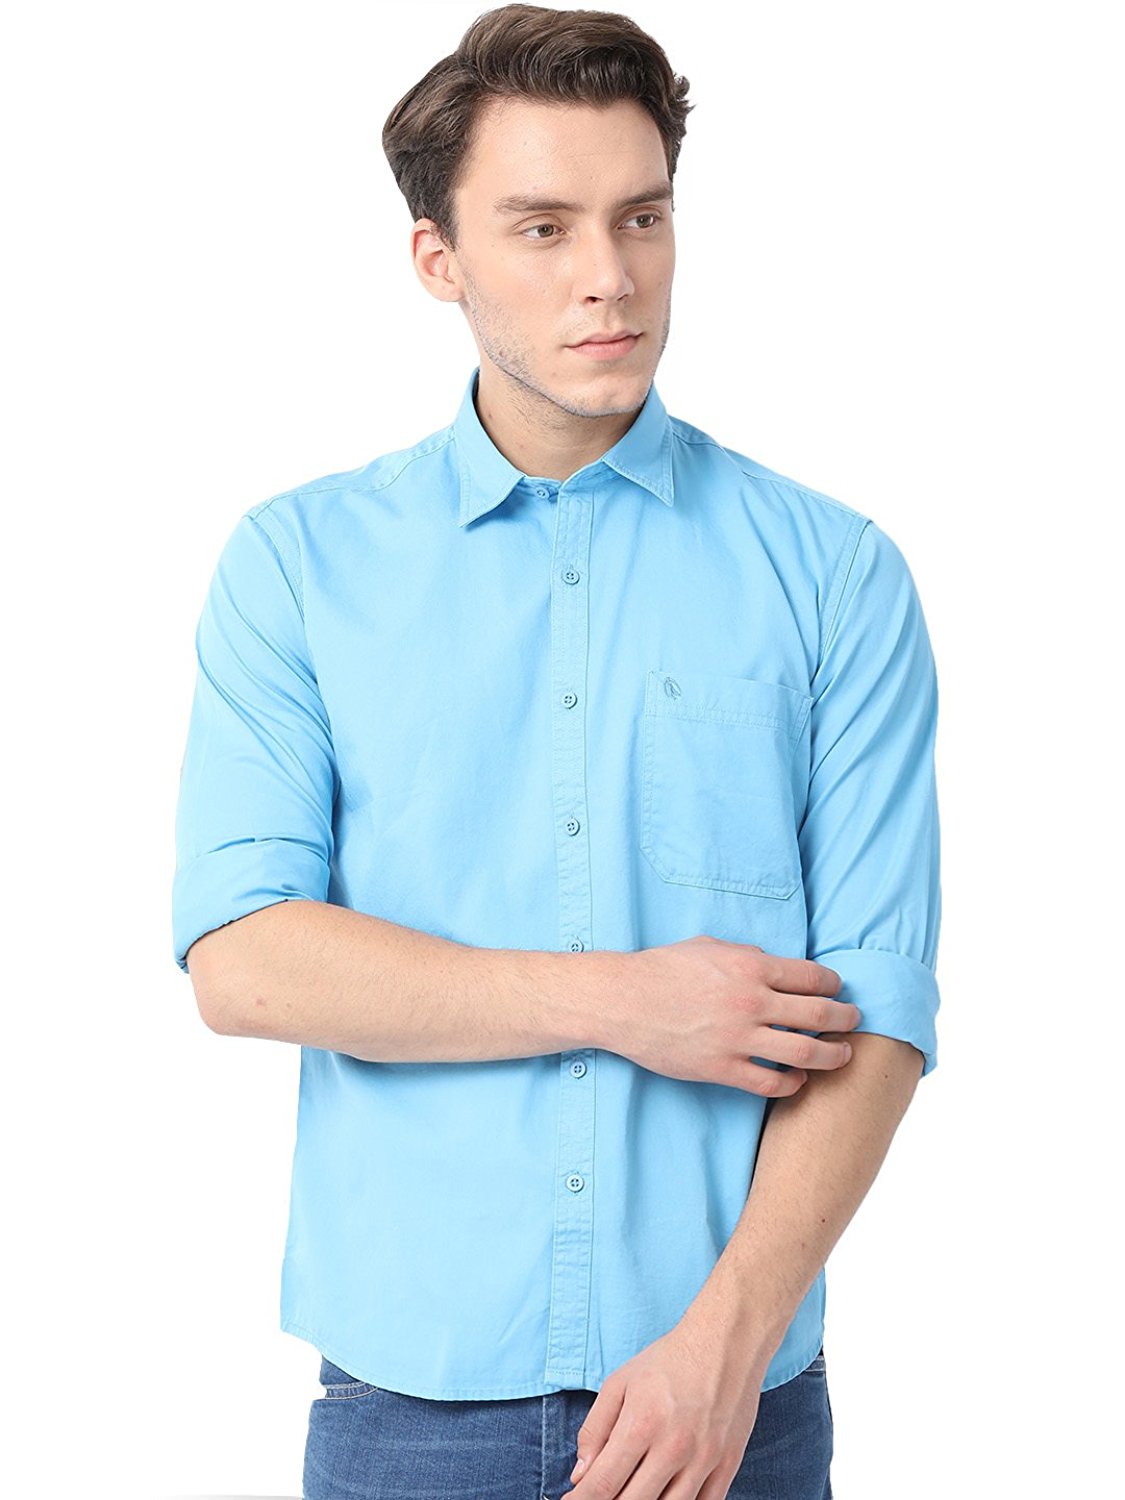 Pan American Blue Formal Shirts for Men's